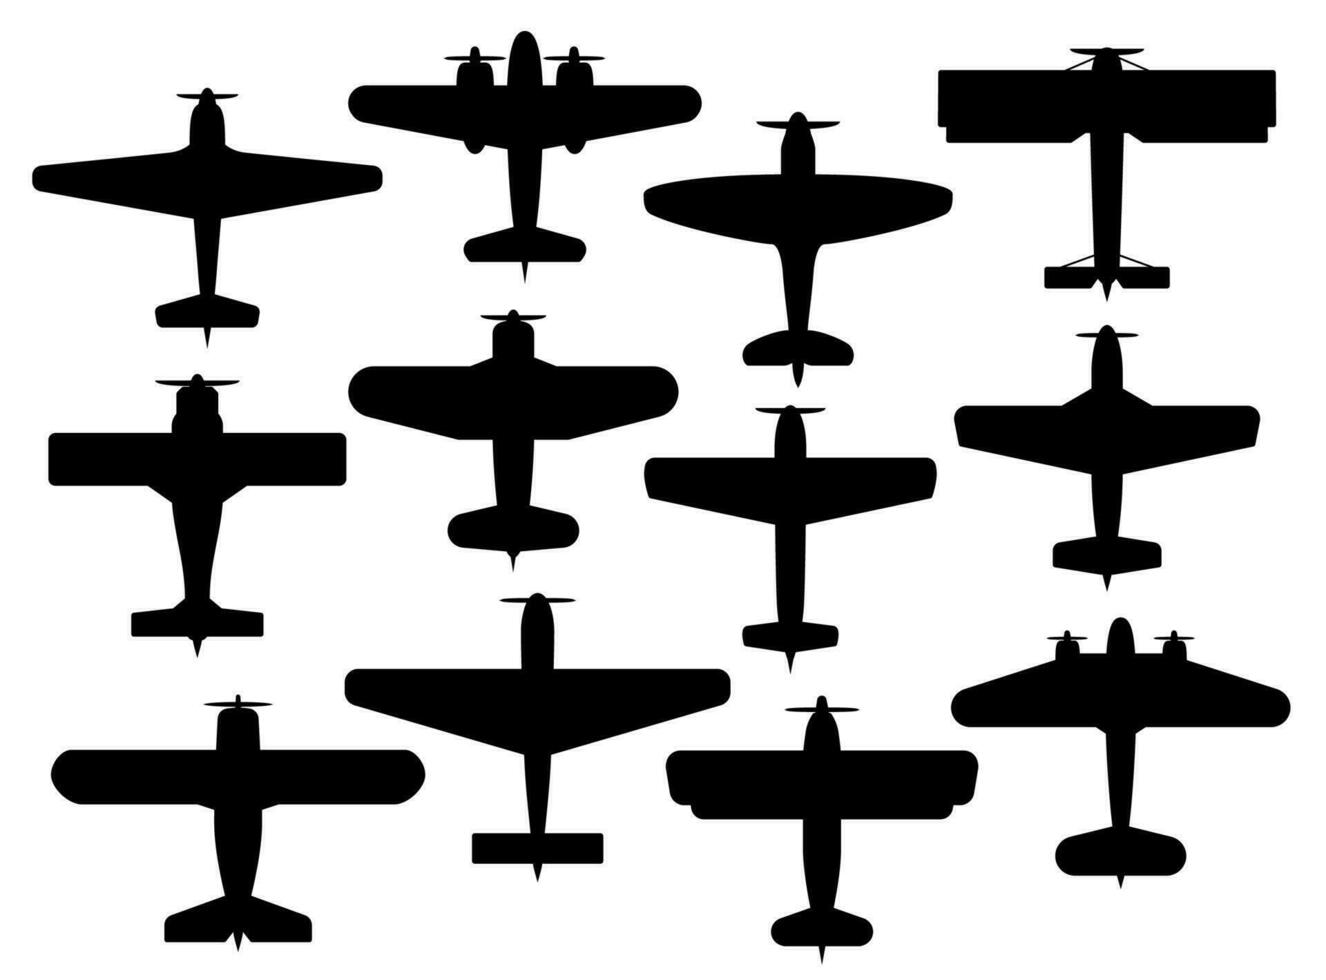 Retro planes black silhouettes, vector airplanes